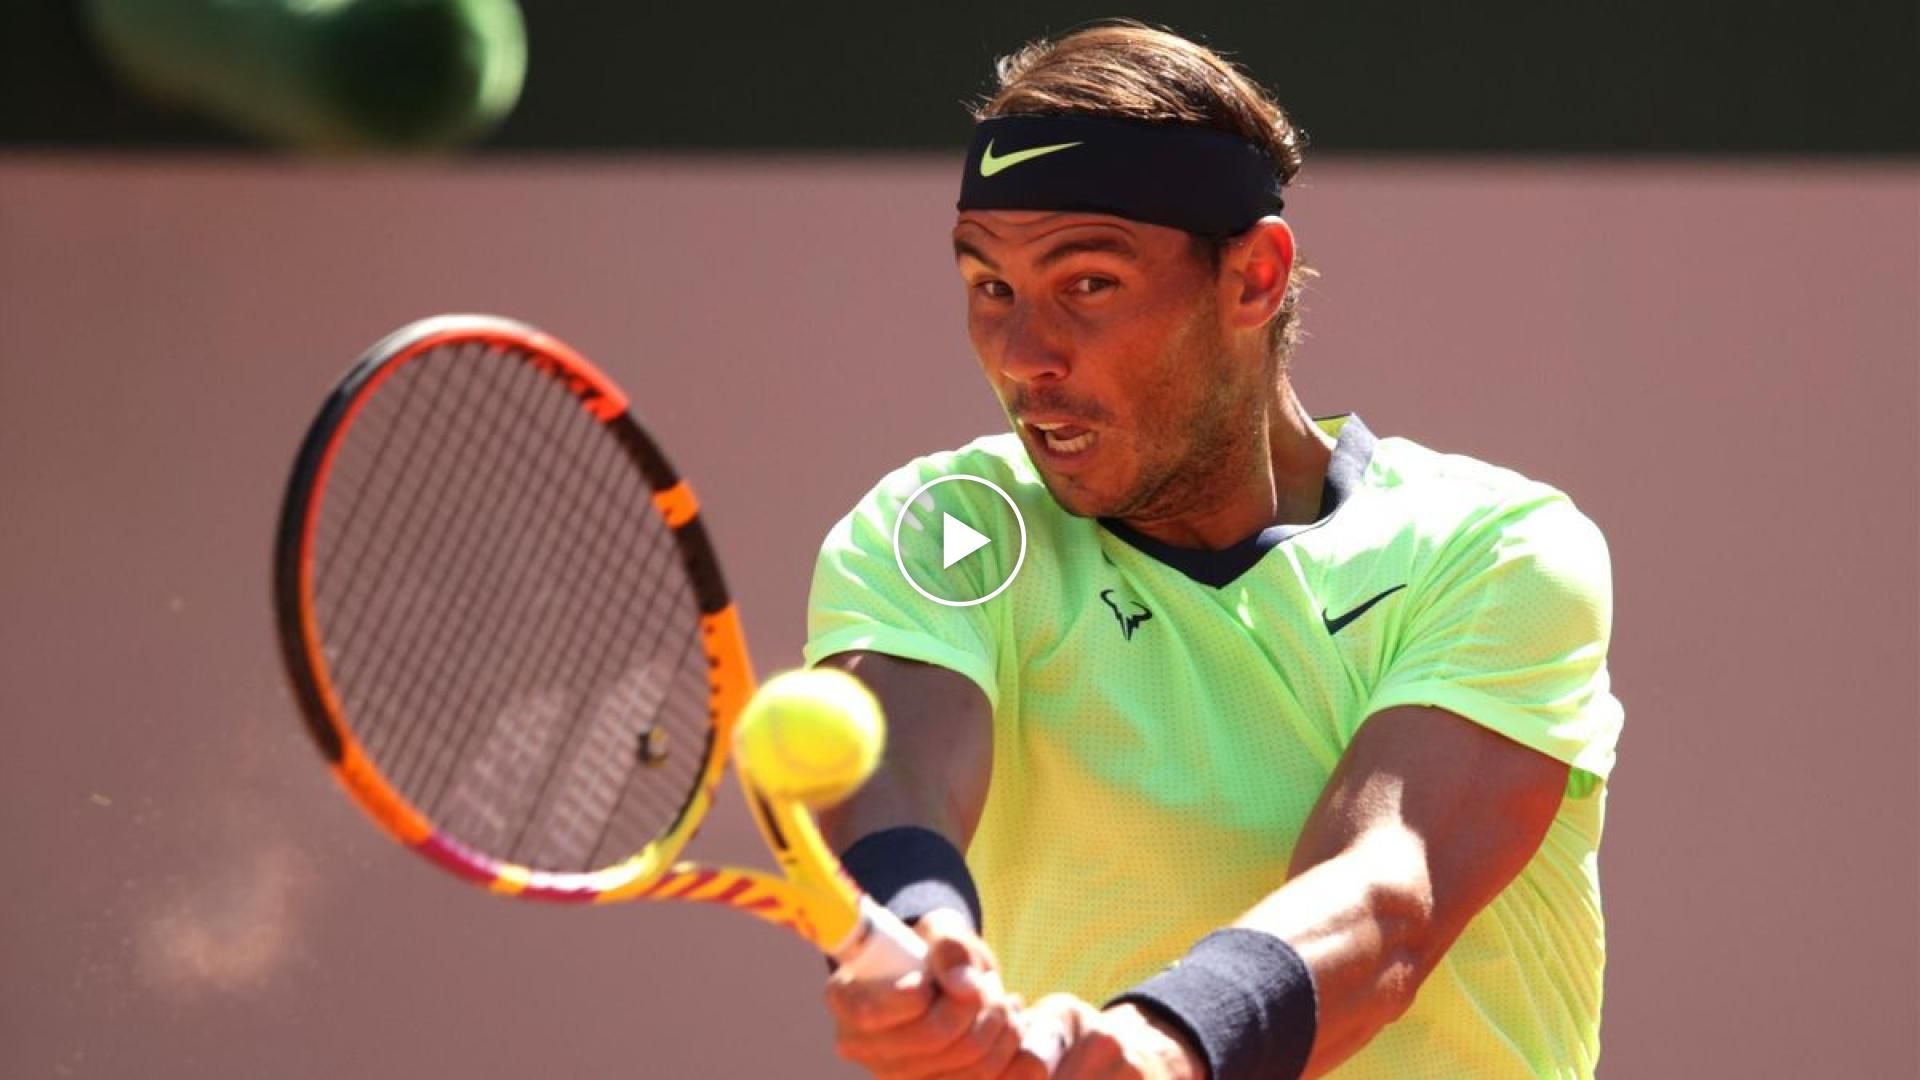 Roland Garros 2021: Rafael Nadal vs Alexei Popyrin's HIGHLIGHTS